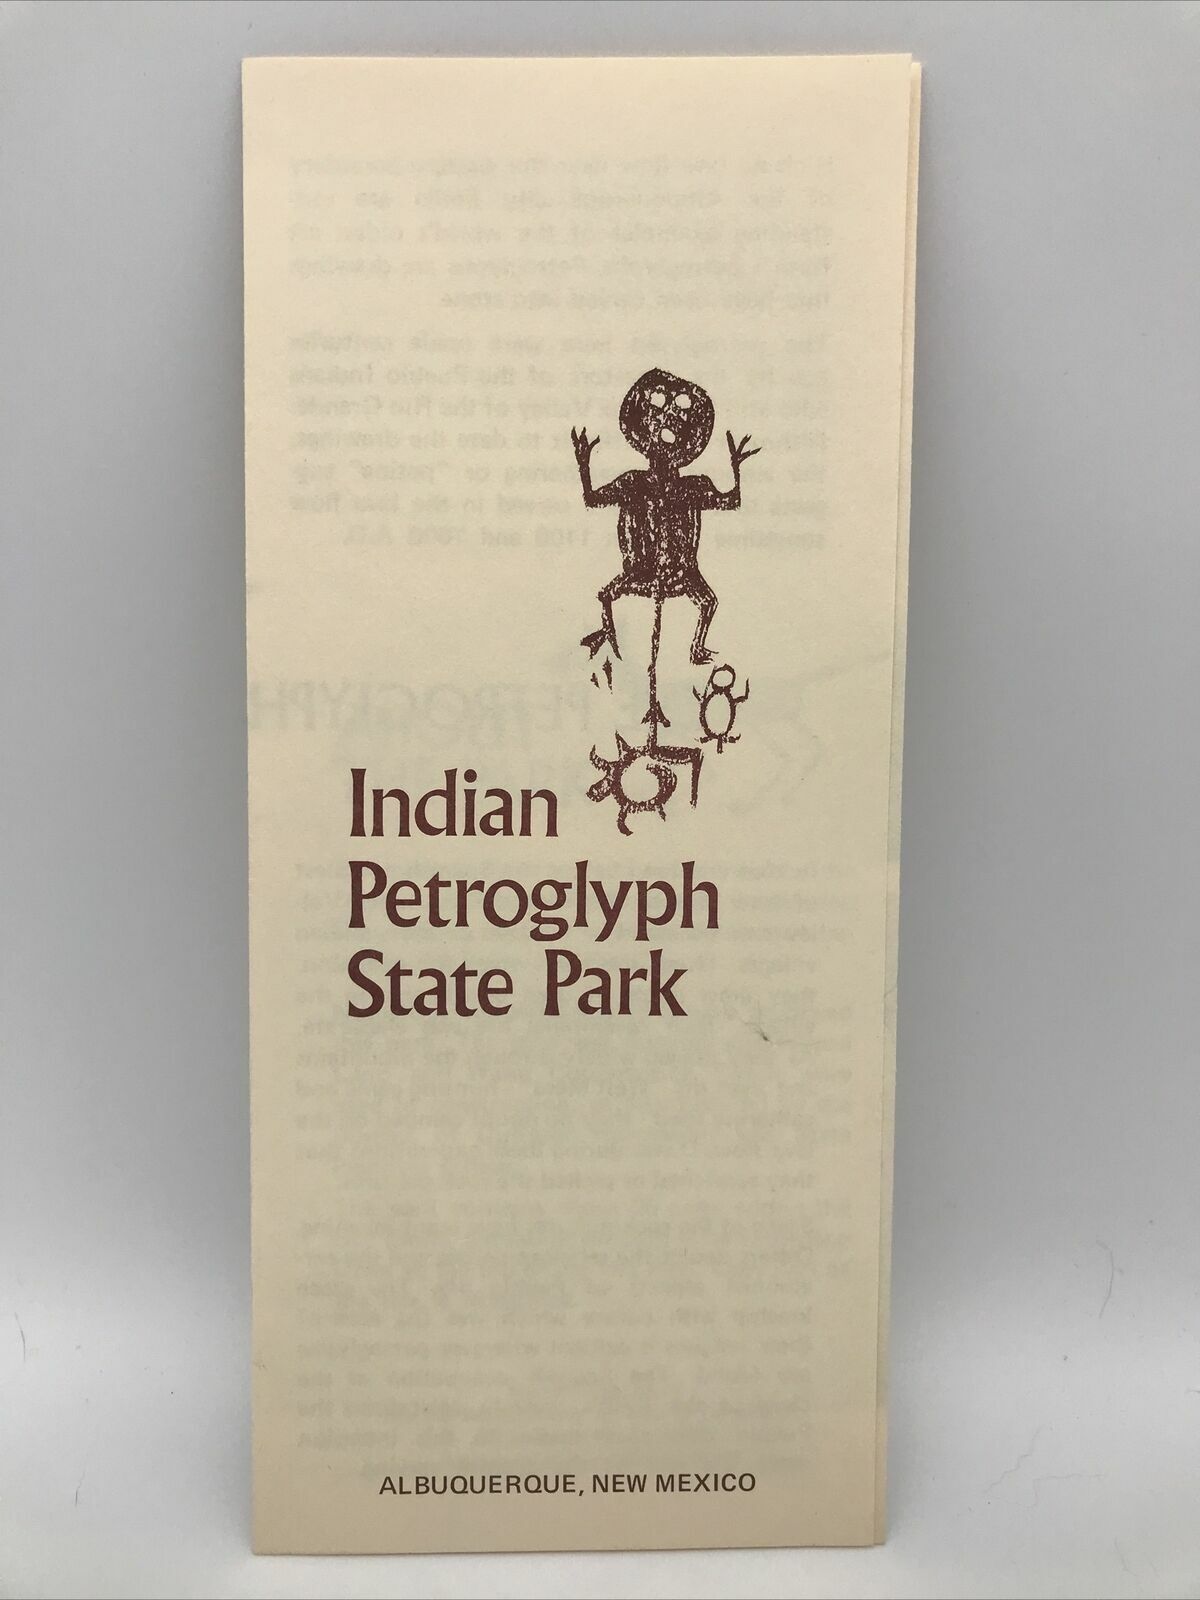 1975 INDIAN PETROGLYPH STATE PARK Albuquerque New Mexico Travel Guide Brochure